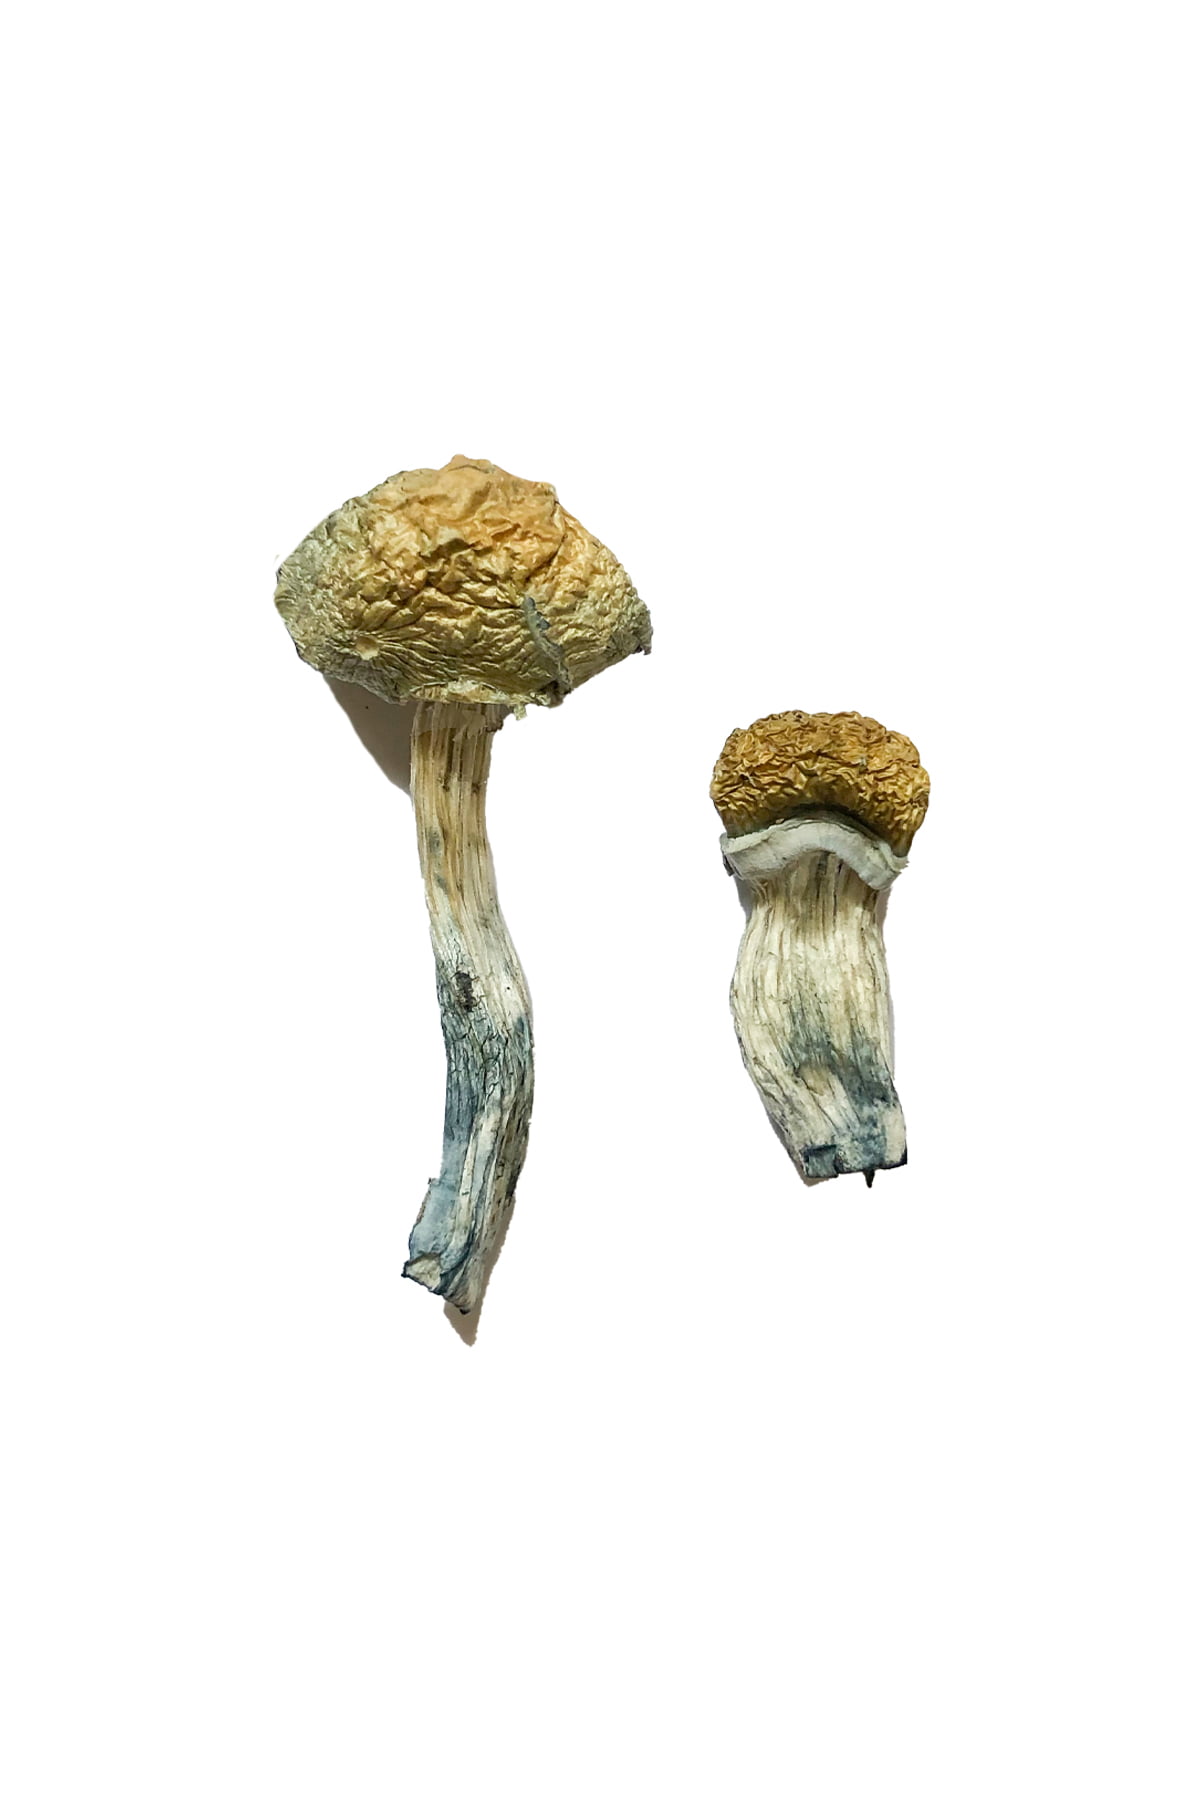 Buy Mazatapec Magic Mushrooms online